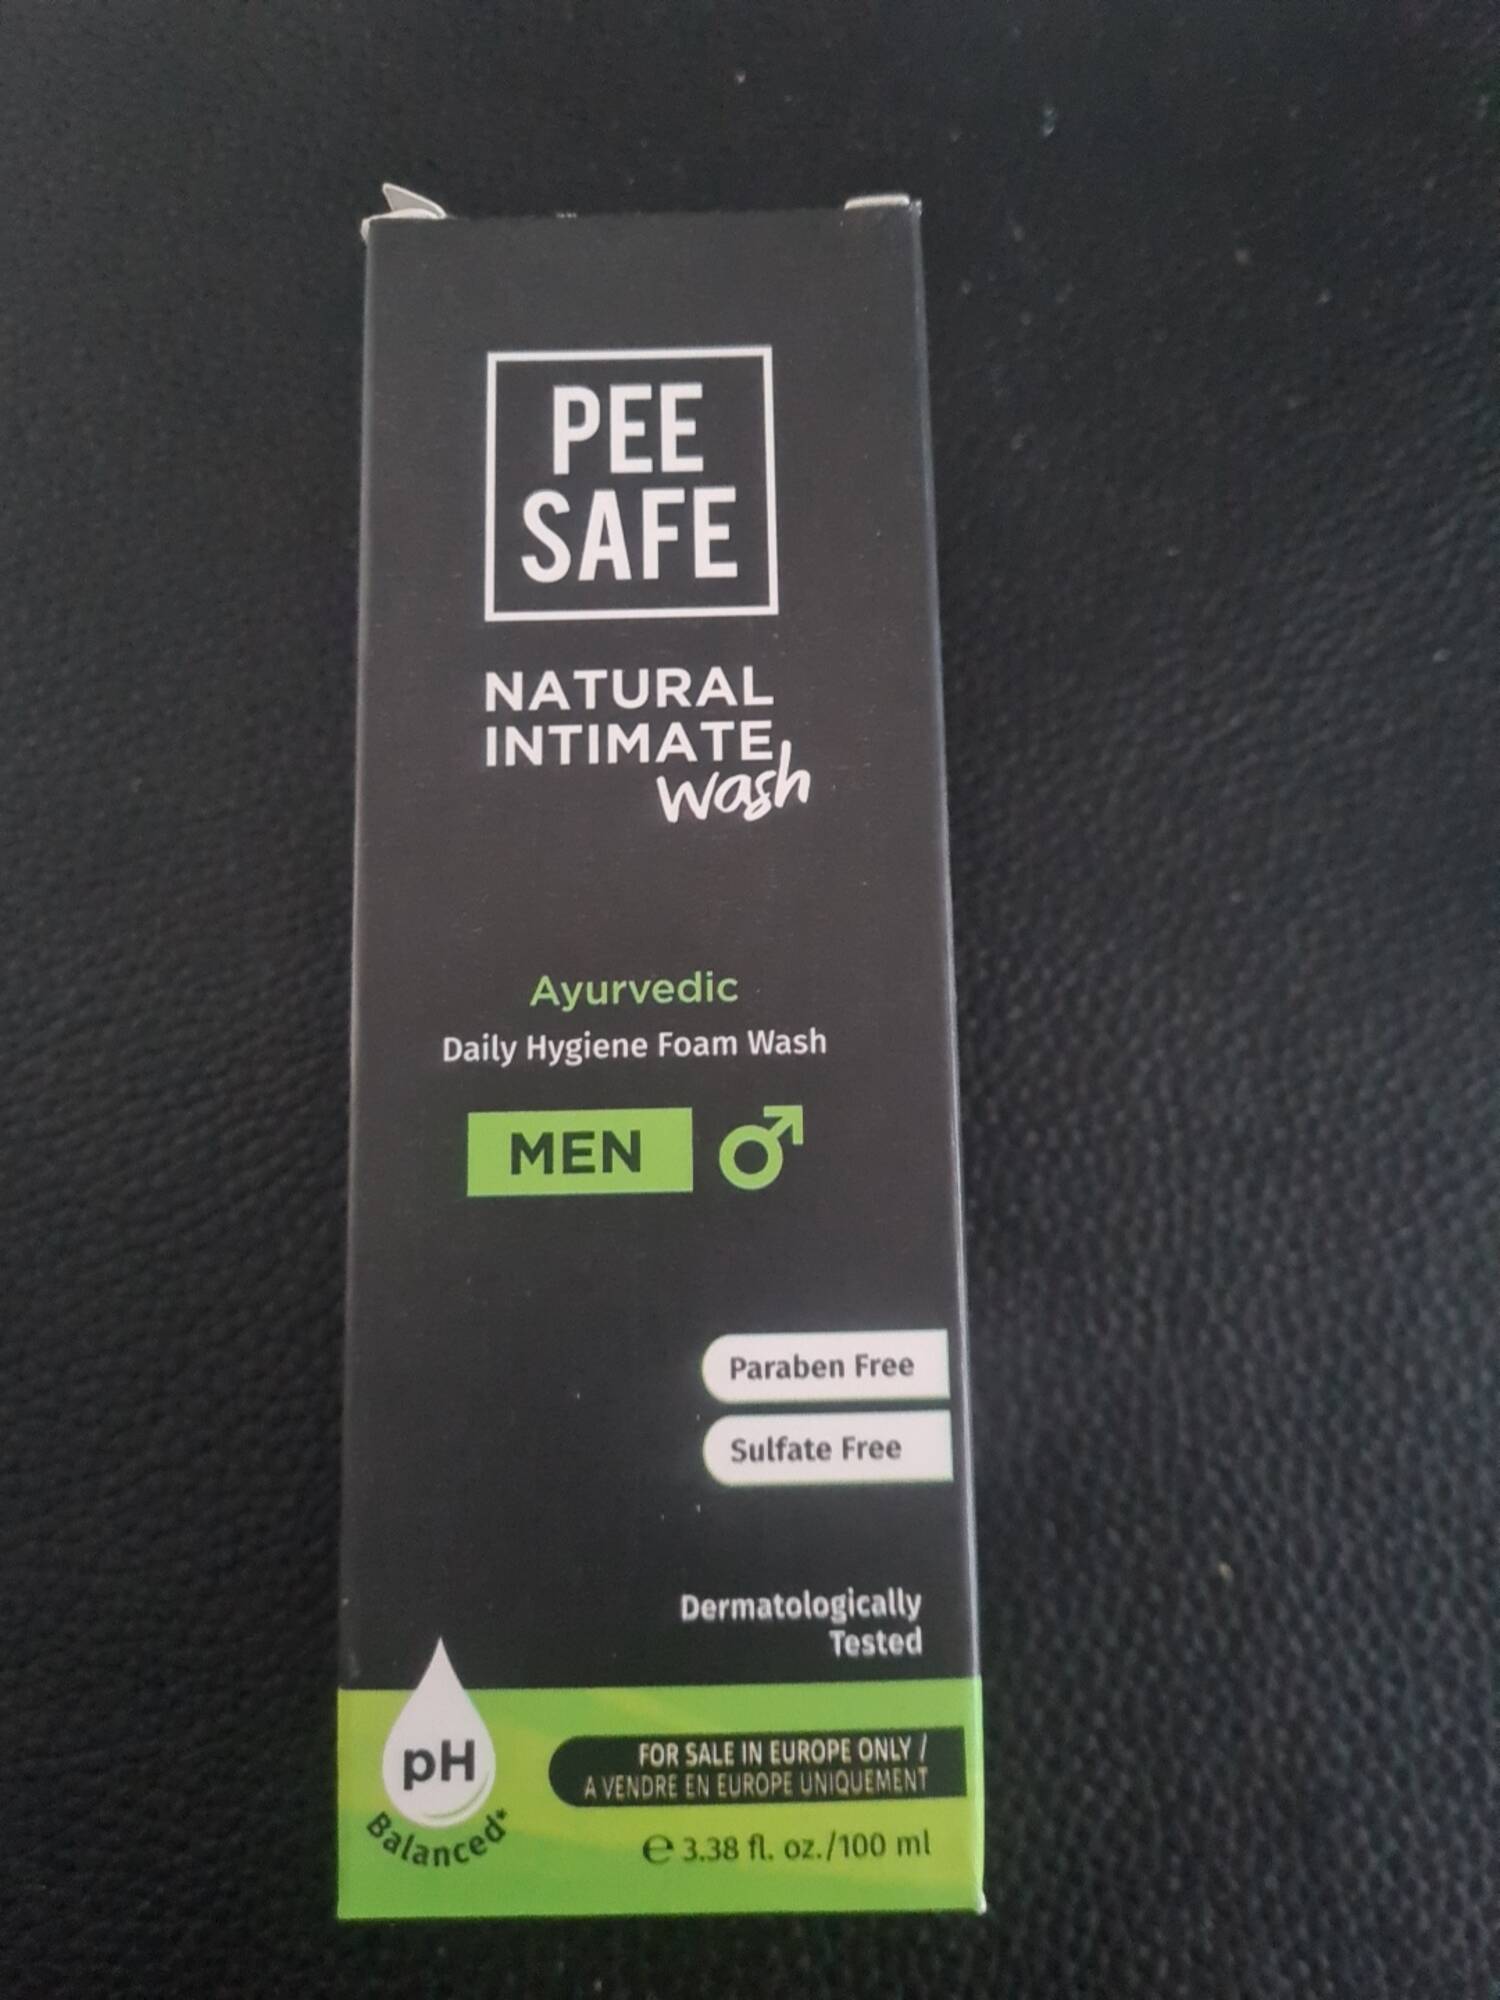 PEE SAFE - Natural intimate wash